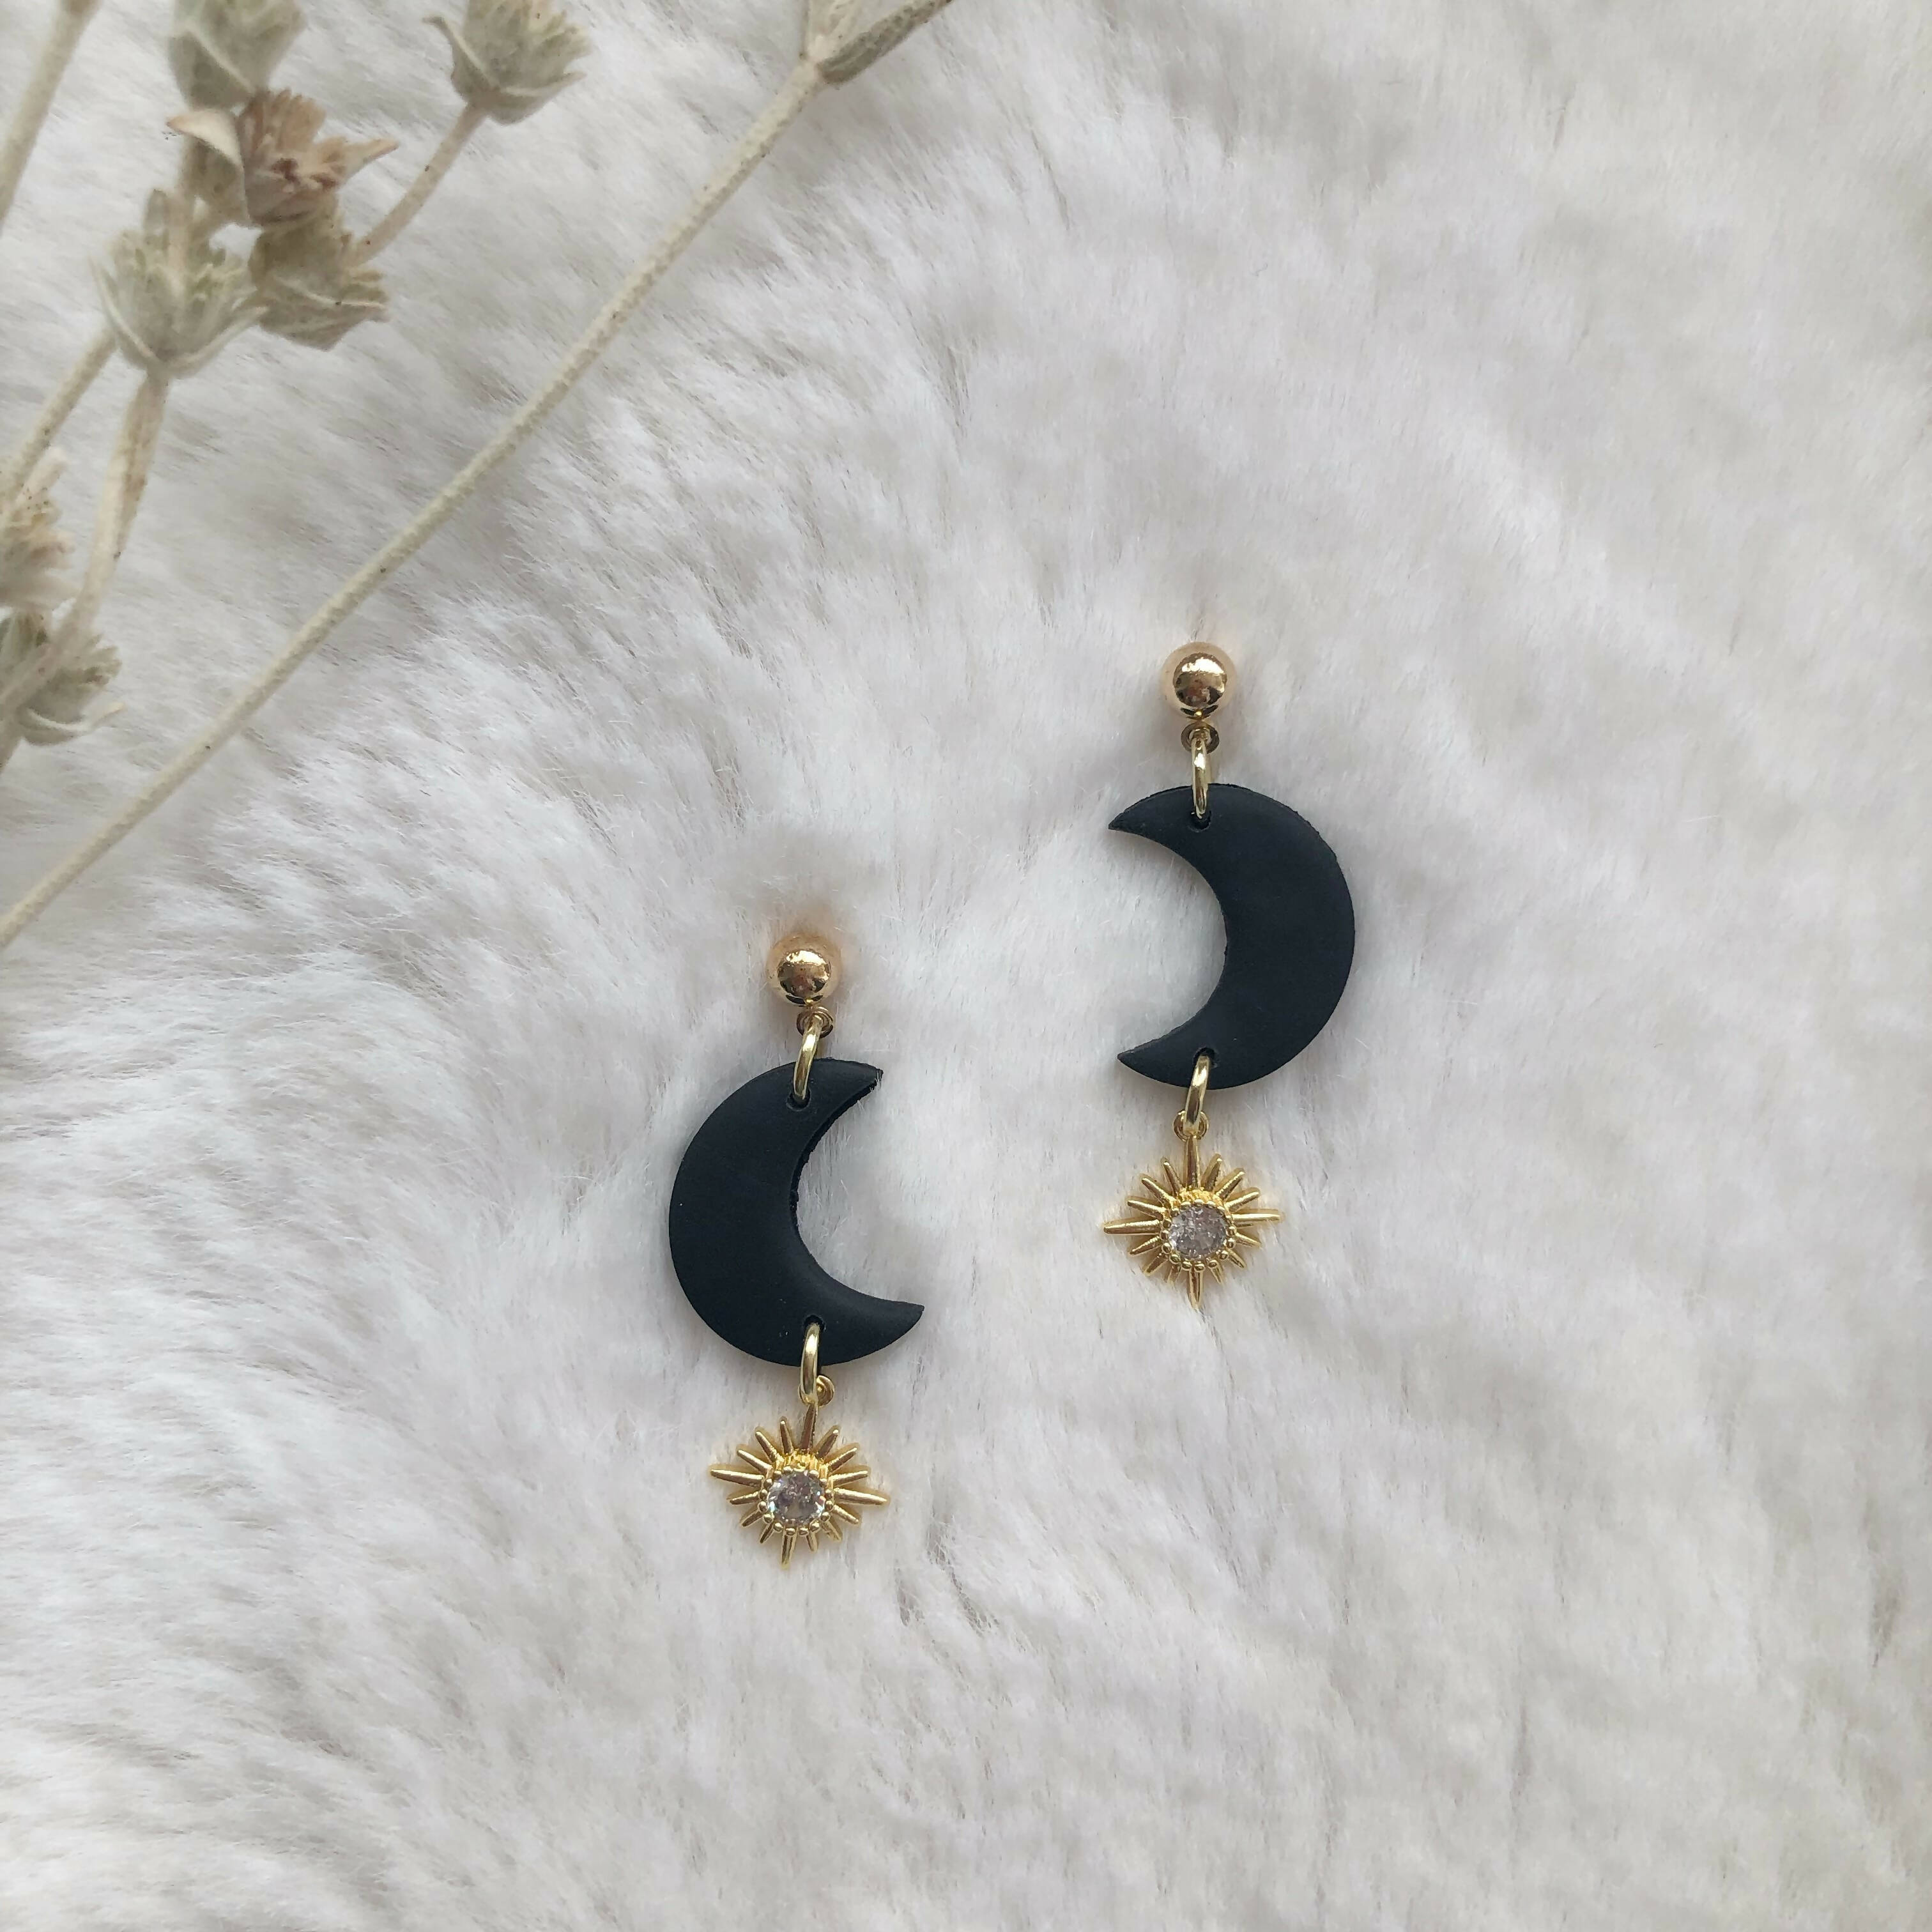 Celestial Luna Moon Clay Earrings